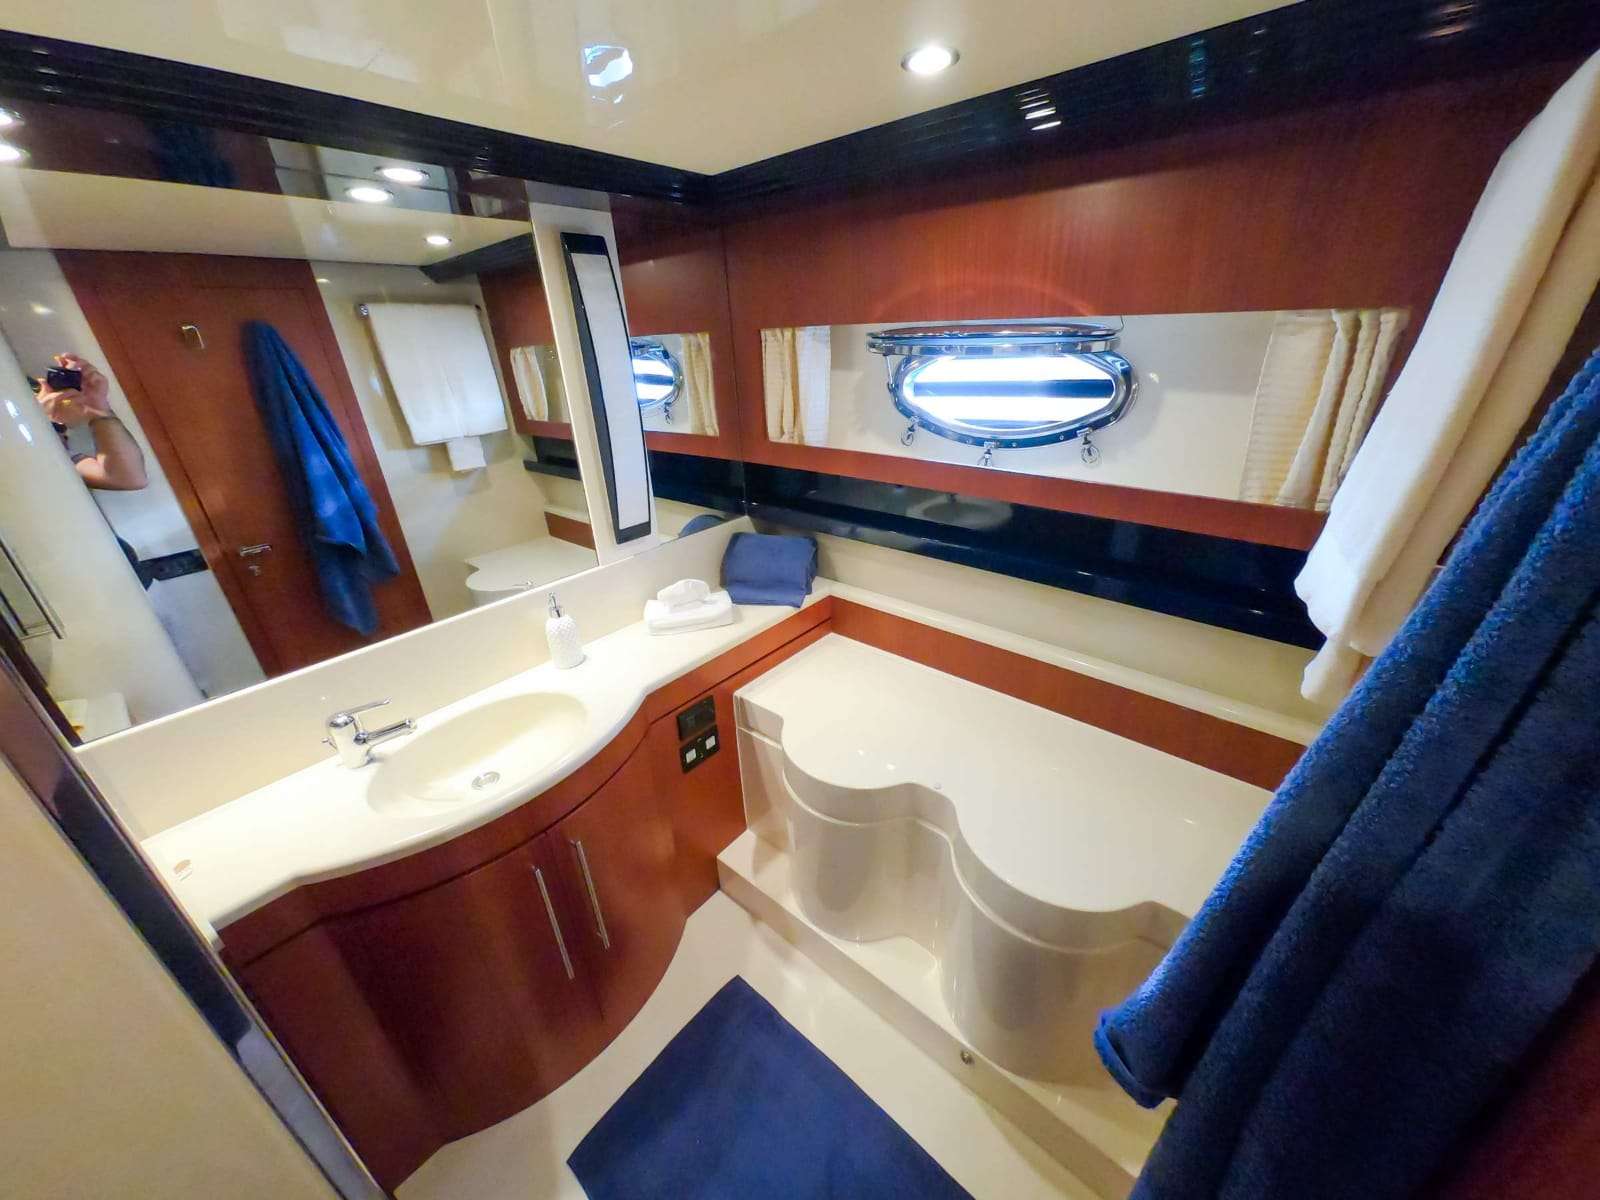 BABLUC Yacht Charter - Master Bathroom